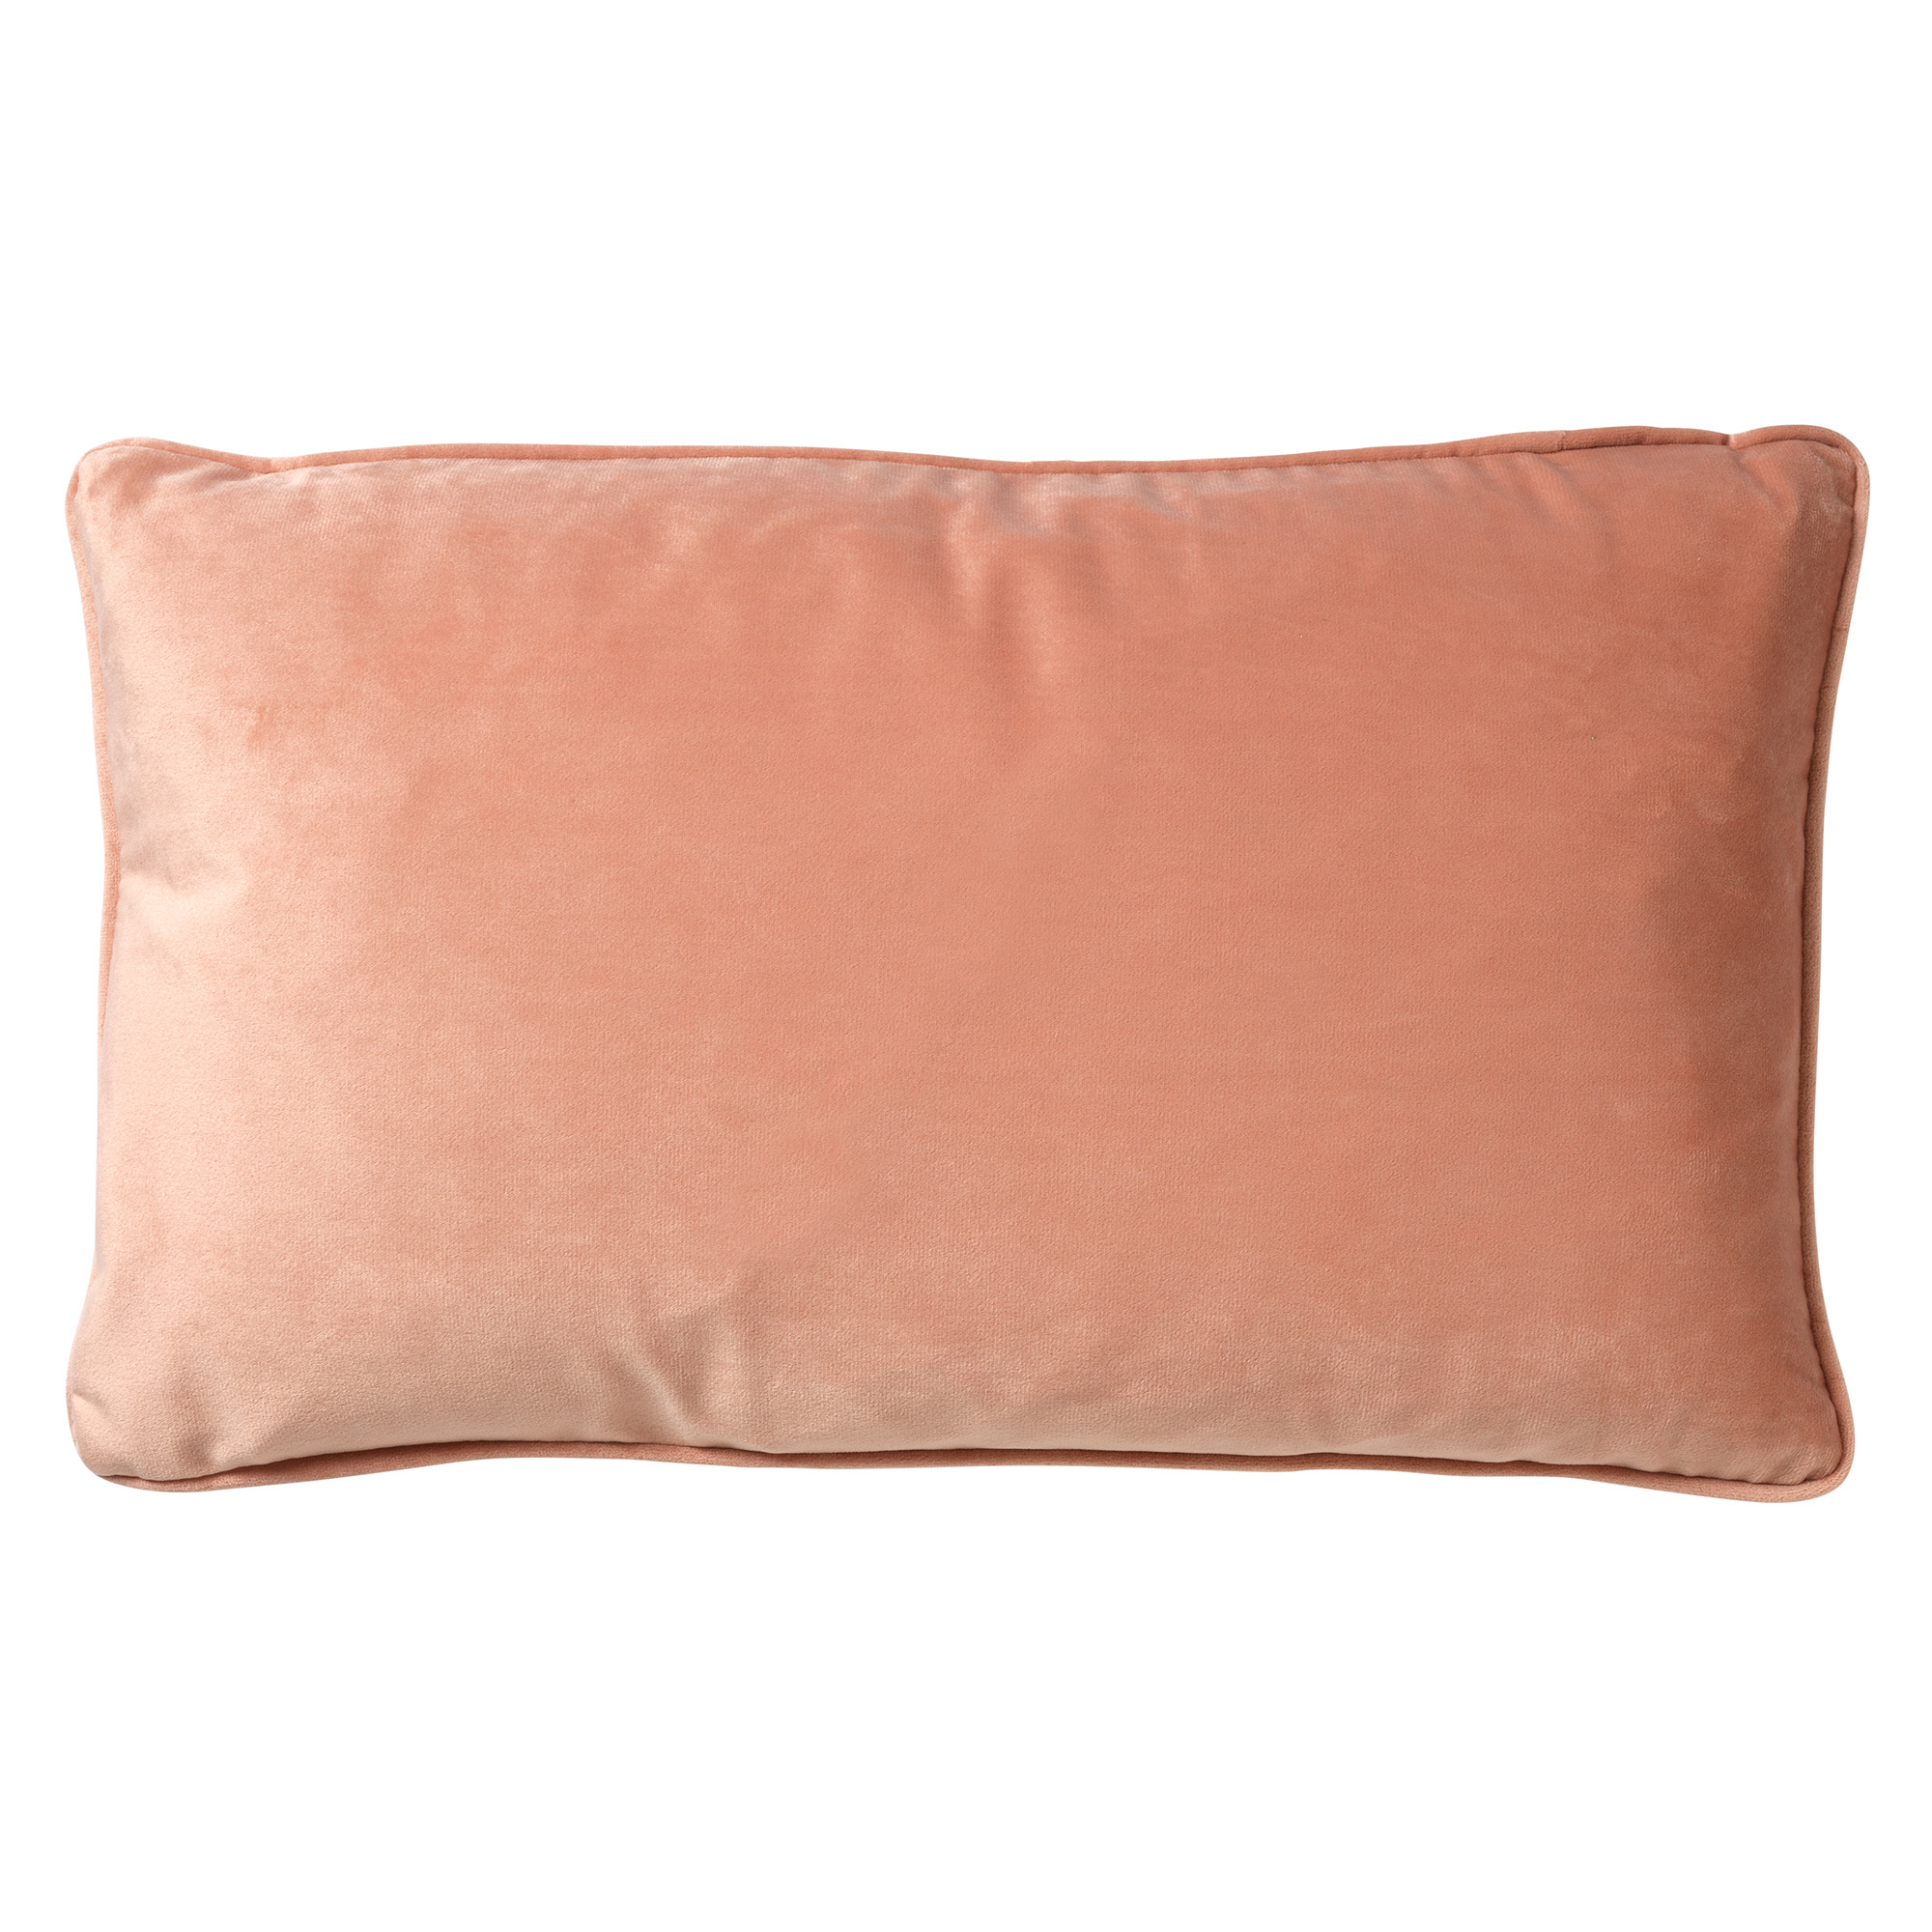 FINN - Kussenhoes velvet 30x50 cm - Muted Clay - roze